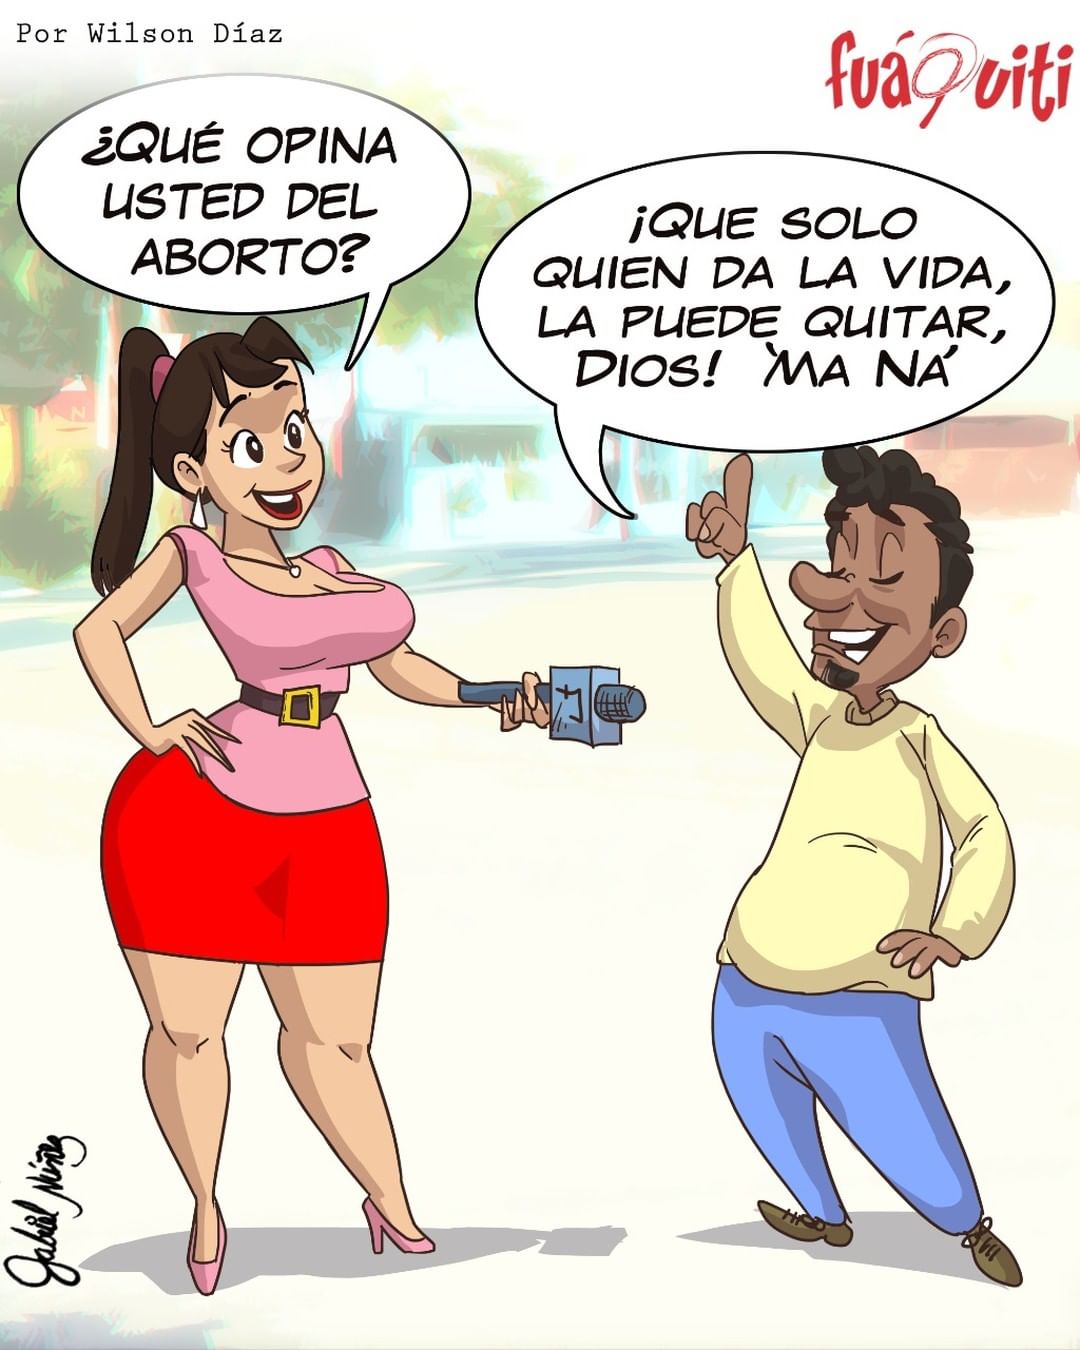 A la calle no hay quien la calle! - Caricatura Fuaquiti, 18 de Marzo, 2021  - Dominicana.do